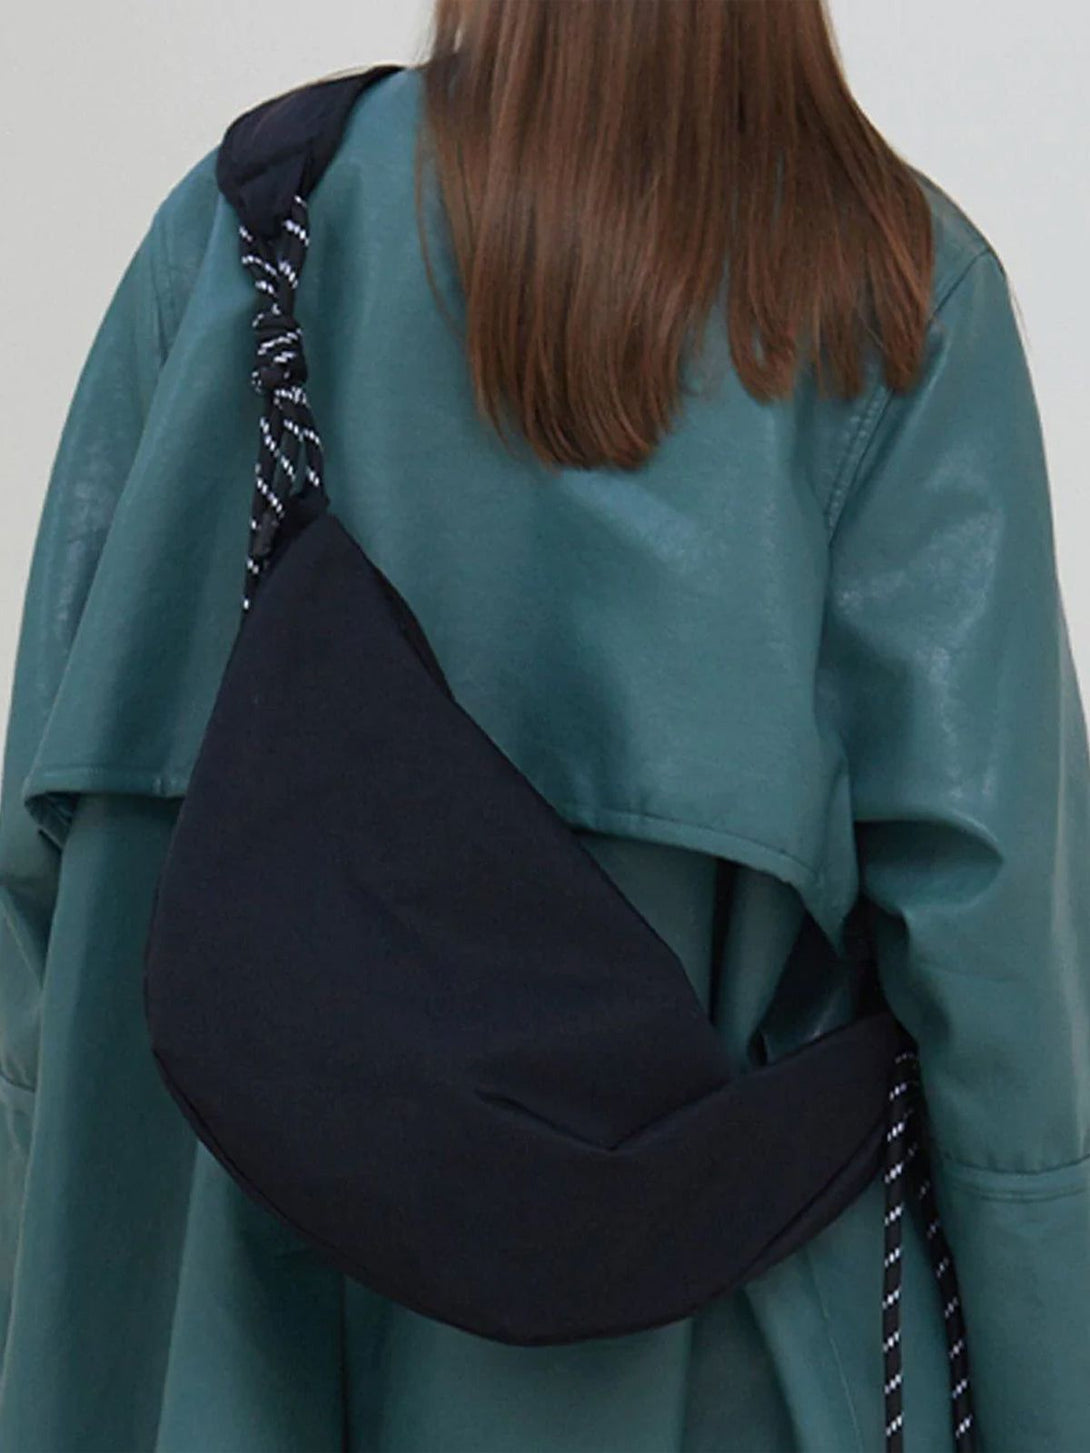 Majesda® - Unisex Dumpling Large Crossbody Bag- Outfit Ideas - Streetwear Fashion - majesda.com